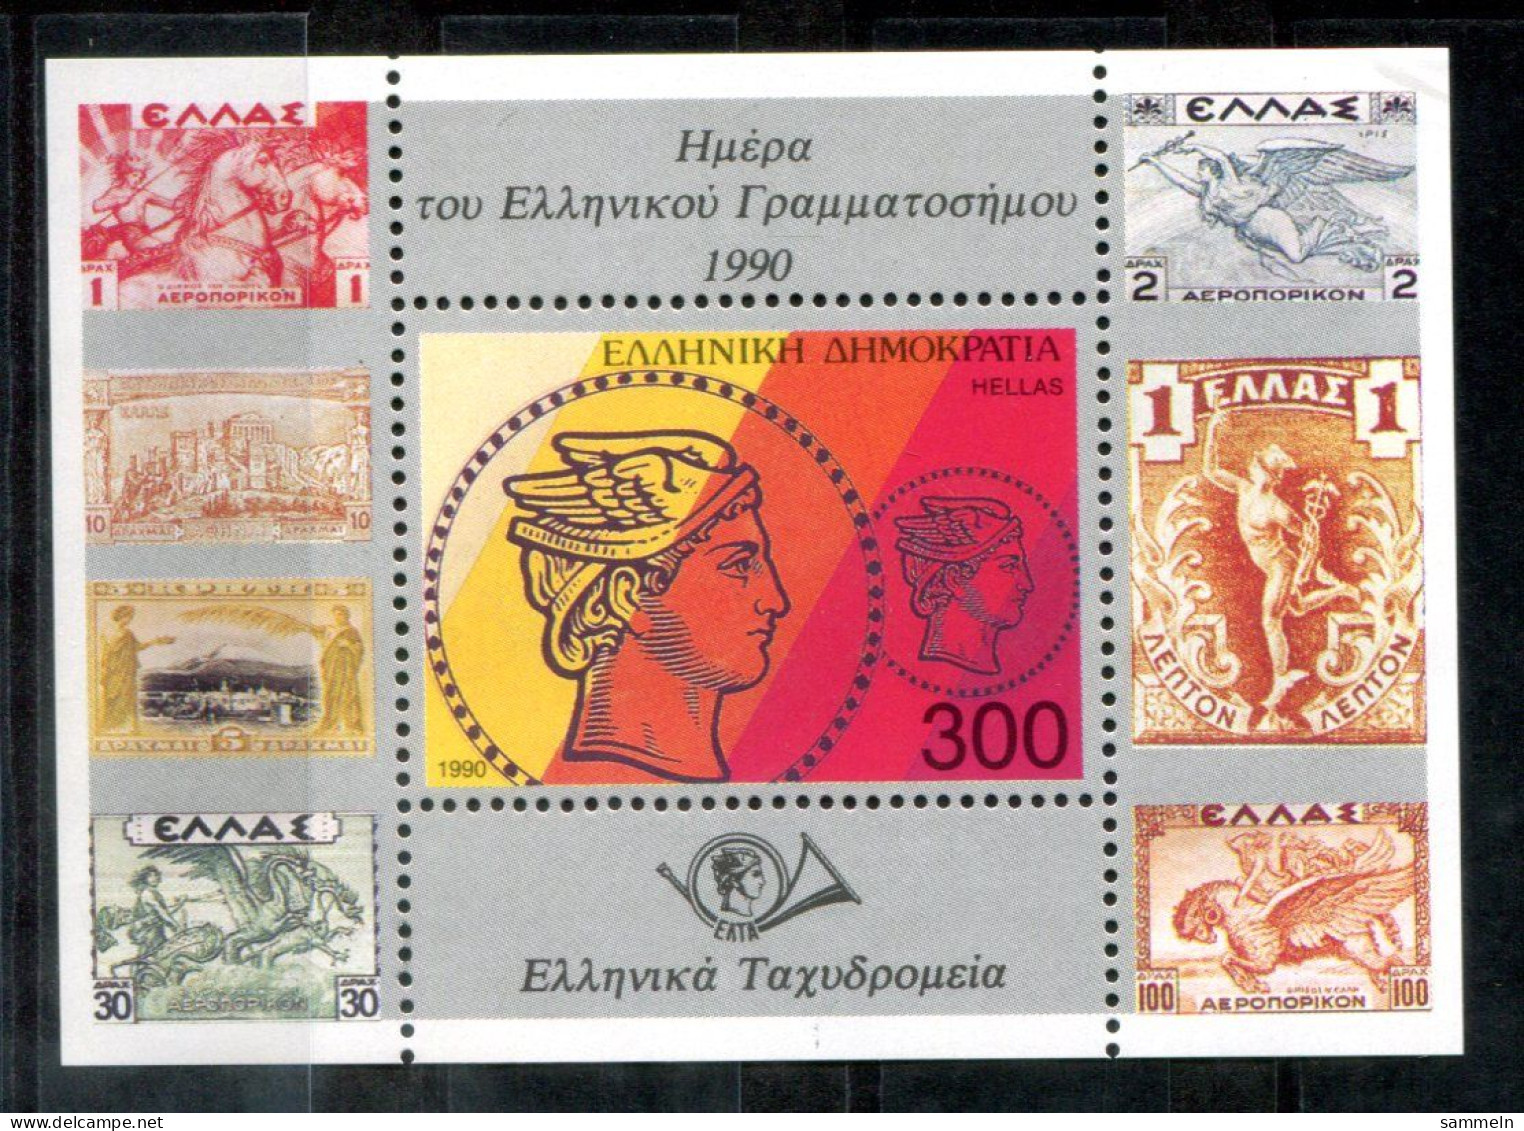 GRIECHENLAND Block 8, Bl.8 Mnh - Marke Auf Marke, Stamp On Stamp, Timbre Sur Timbre - GREECE / GRÈCE - Blocs-feuillets